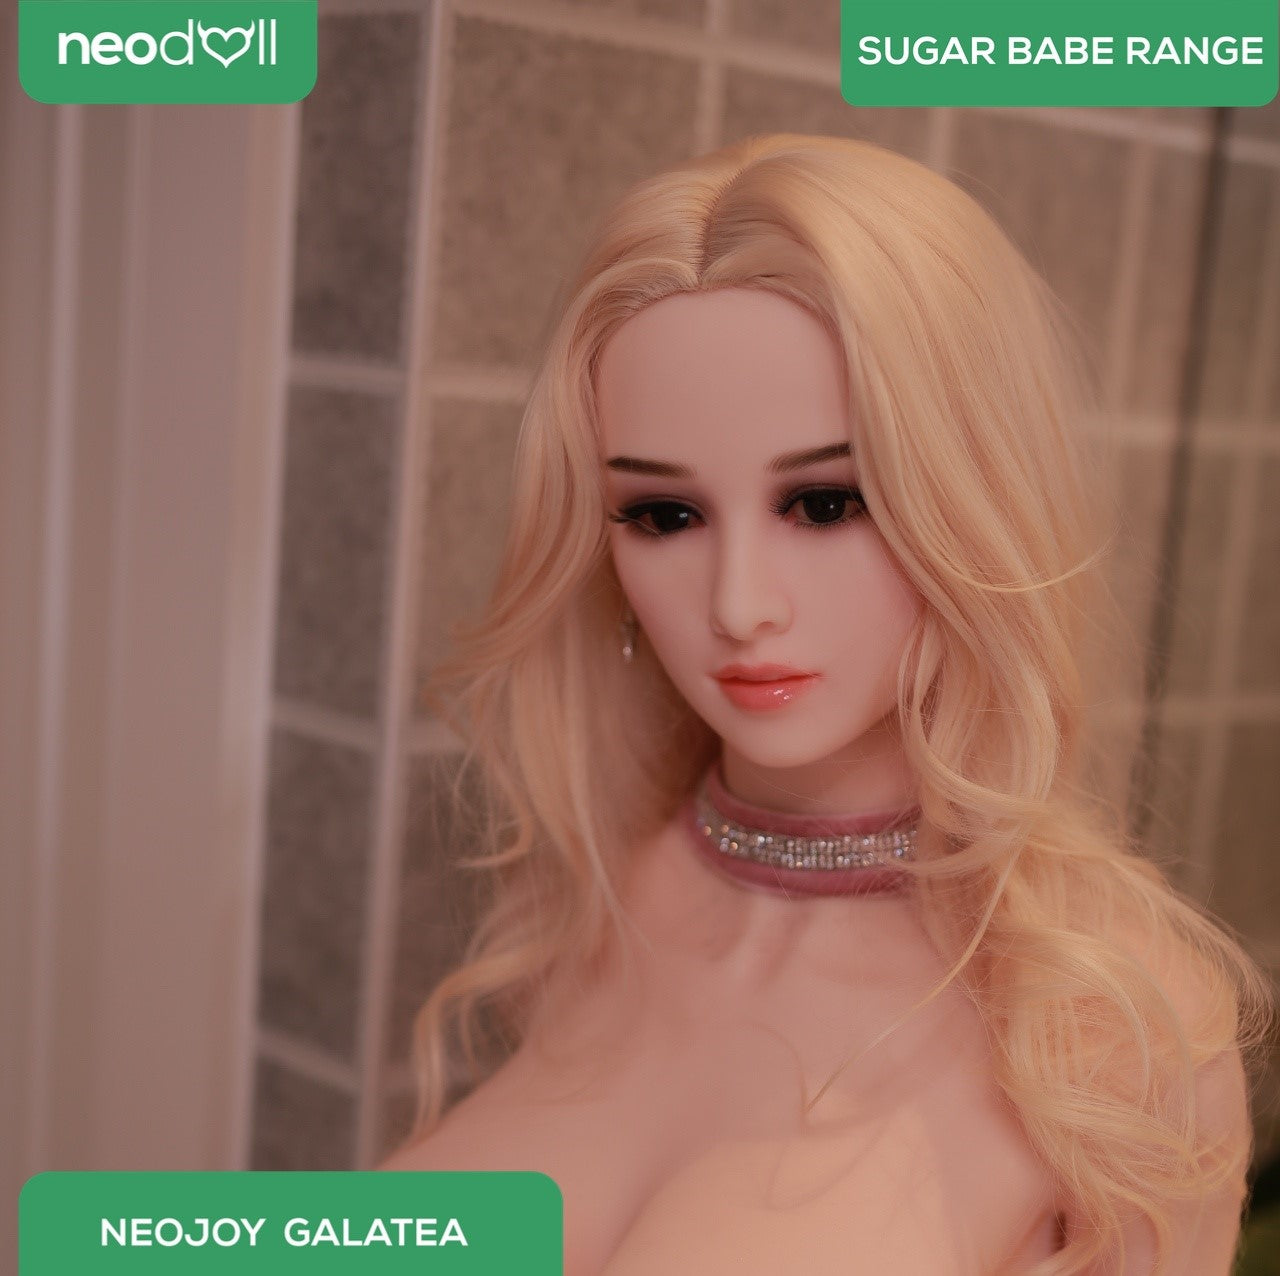 Sex Doll Galatea | 170cm Height | Natural Skin | Shrug & Standing & Uterus | Neodoll Sugar Babe